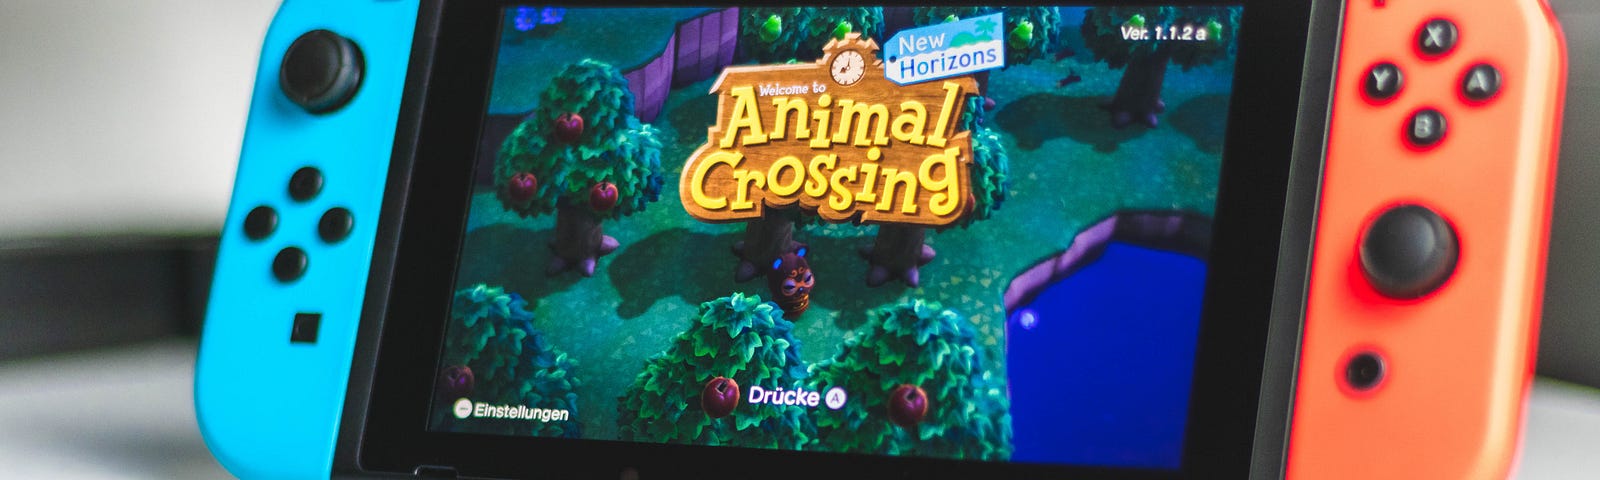 Animal Crossing game on Nintendo Switch